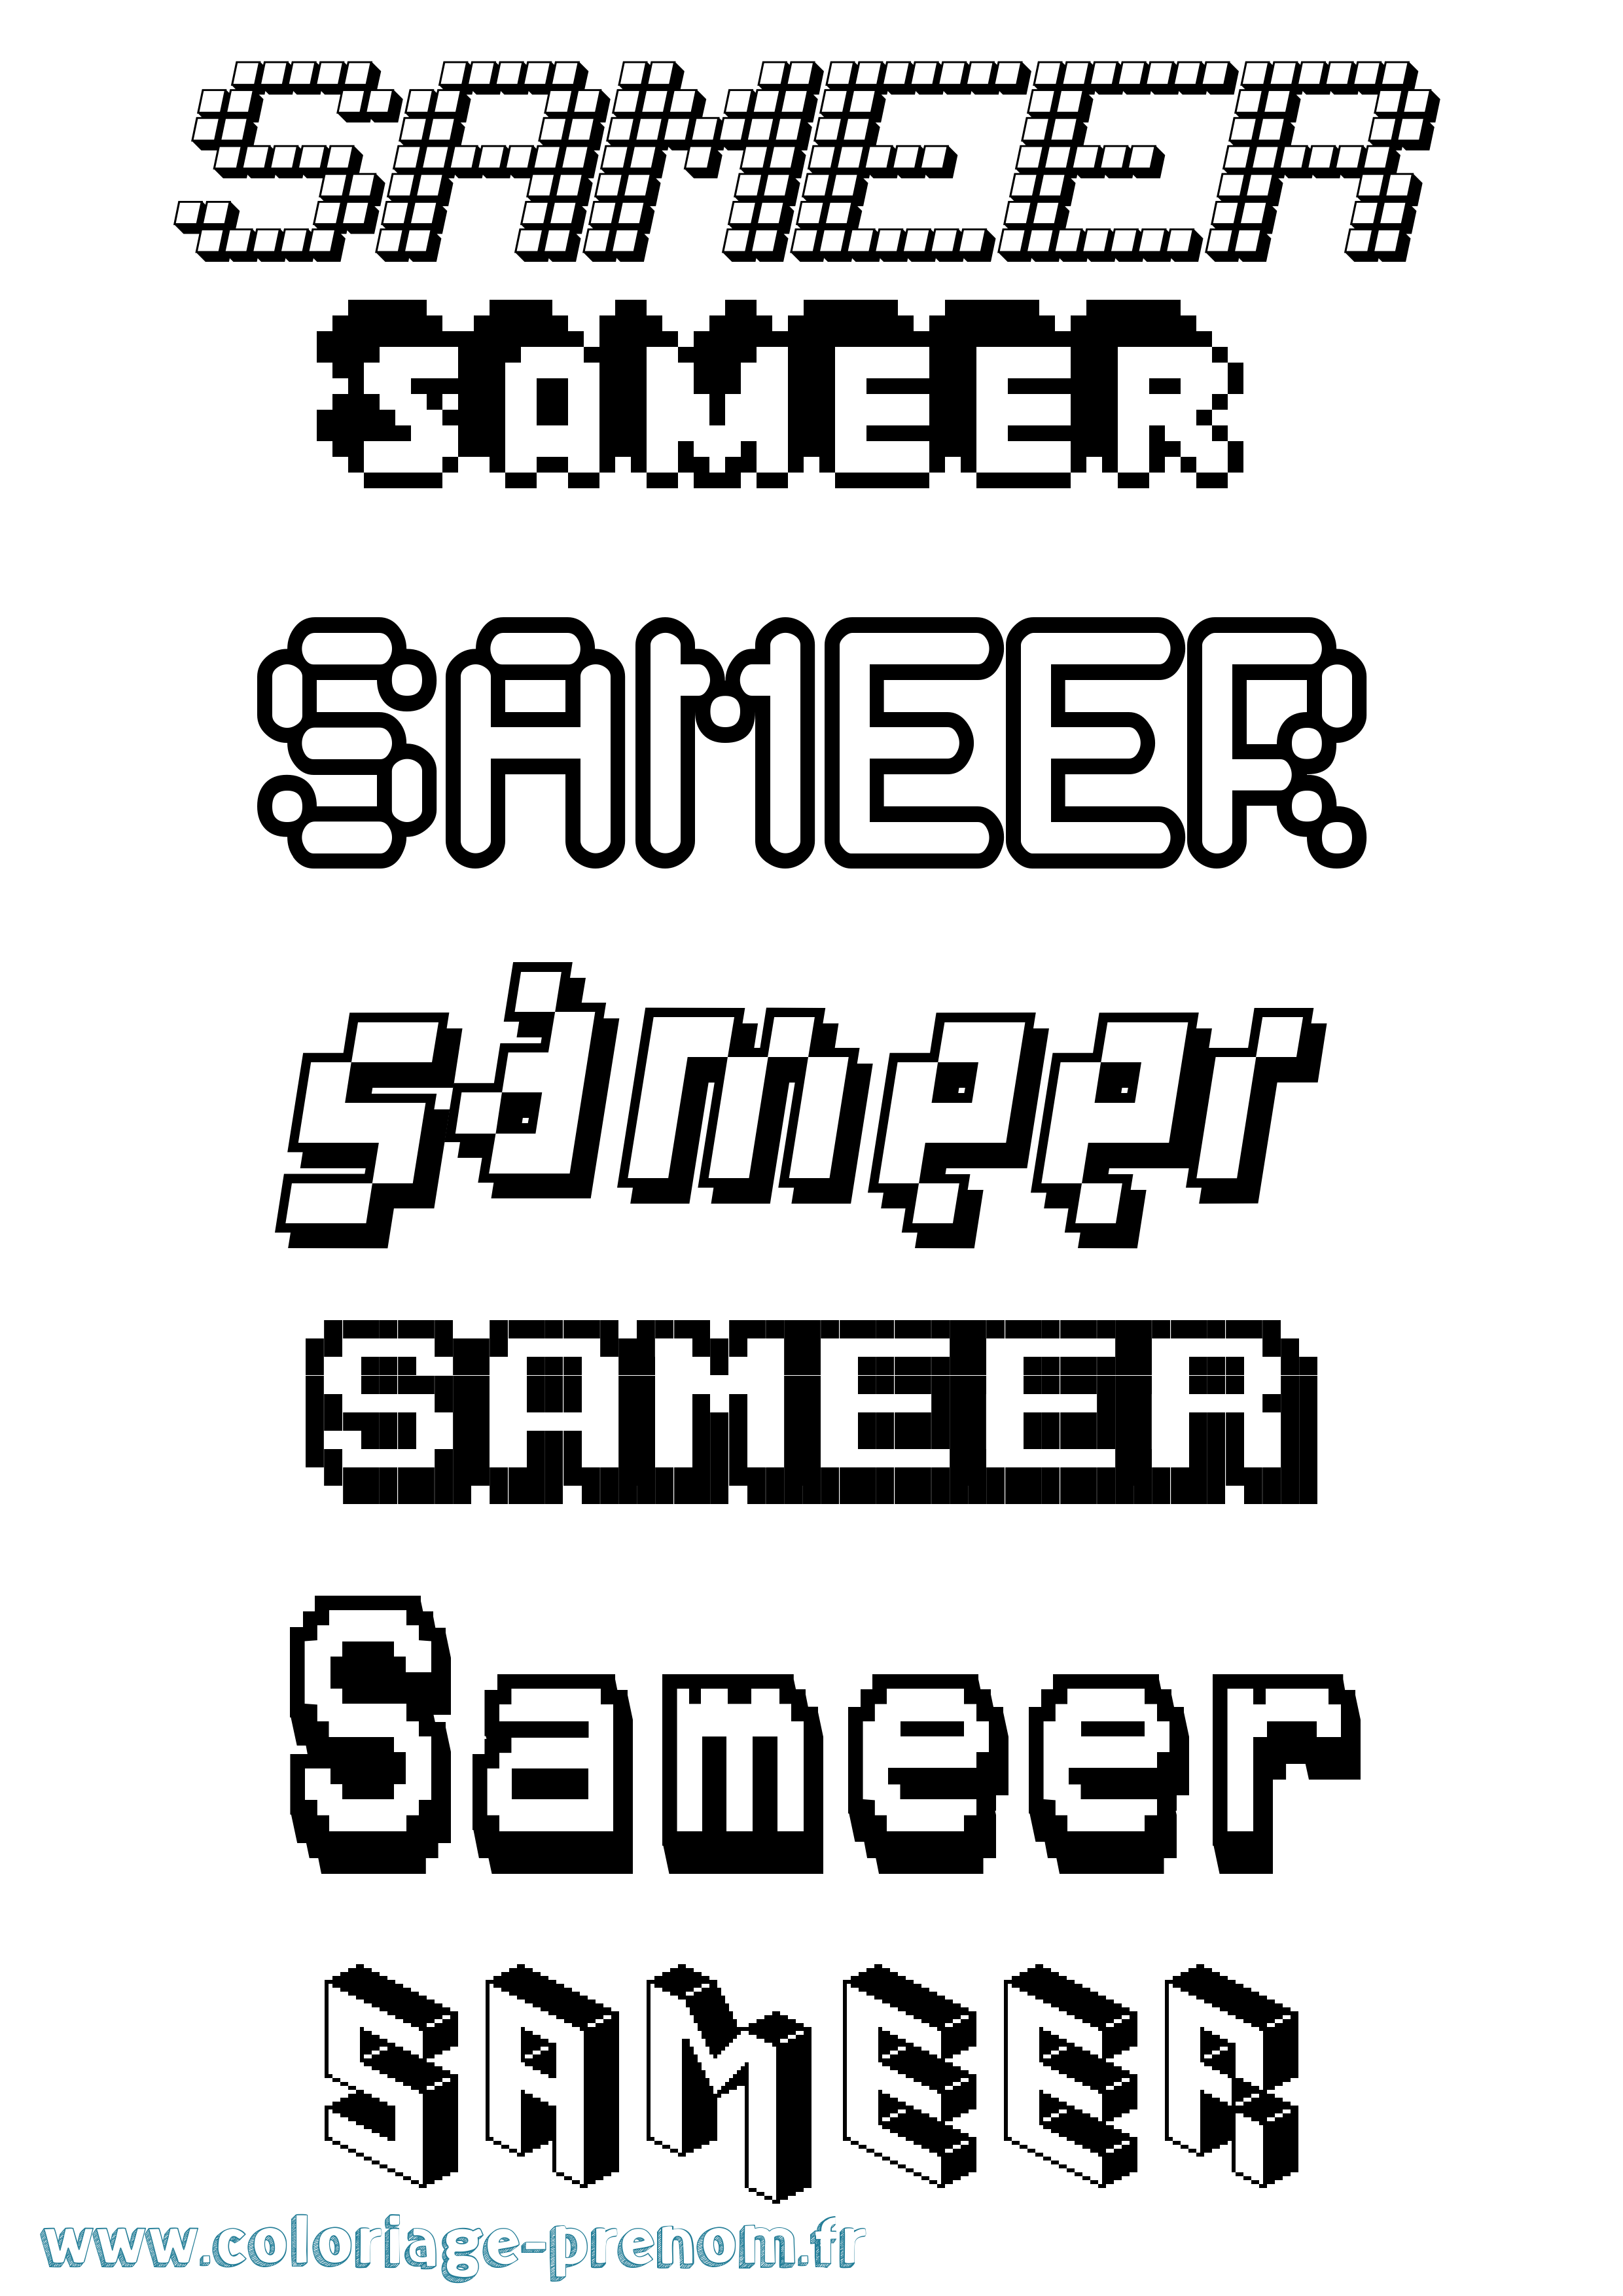 Coloriage prénom Sameer Pixel